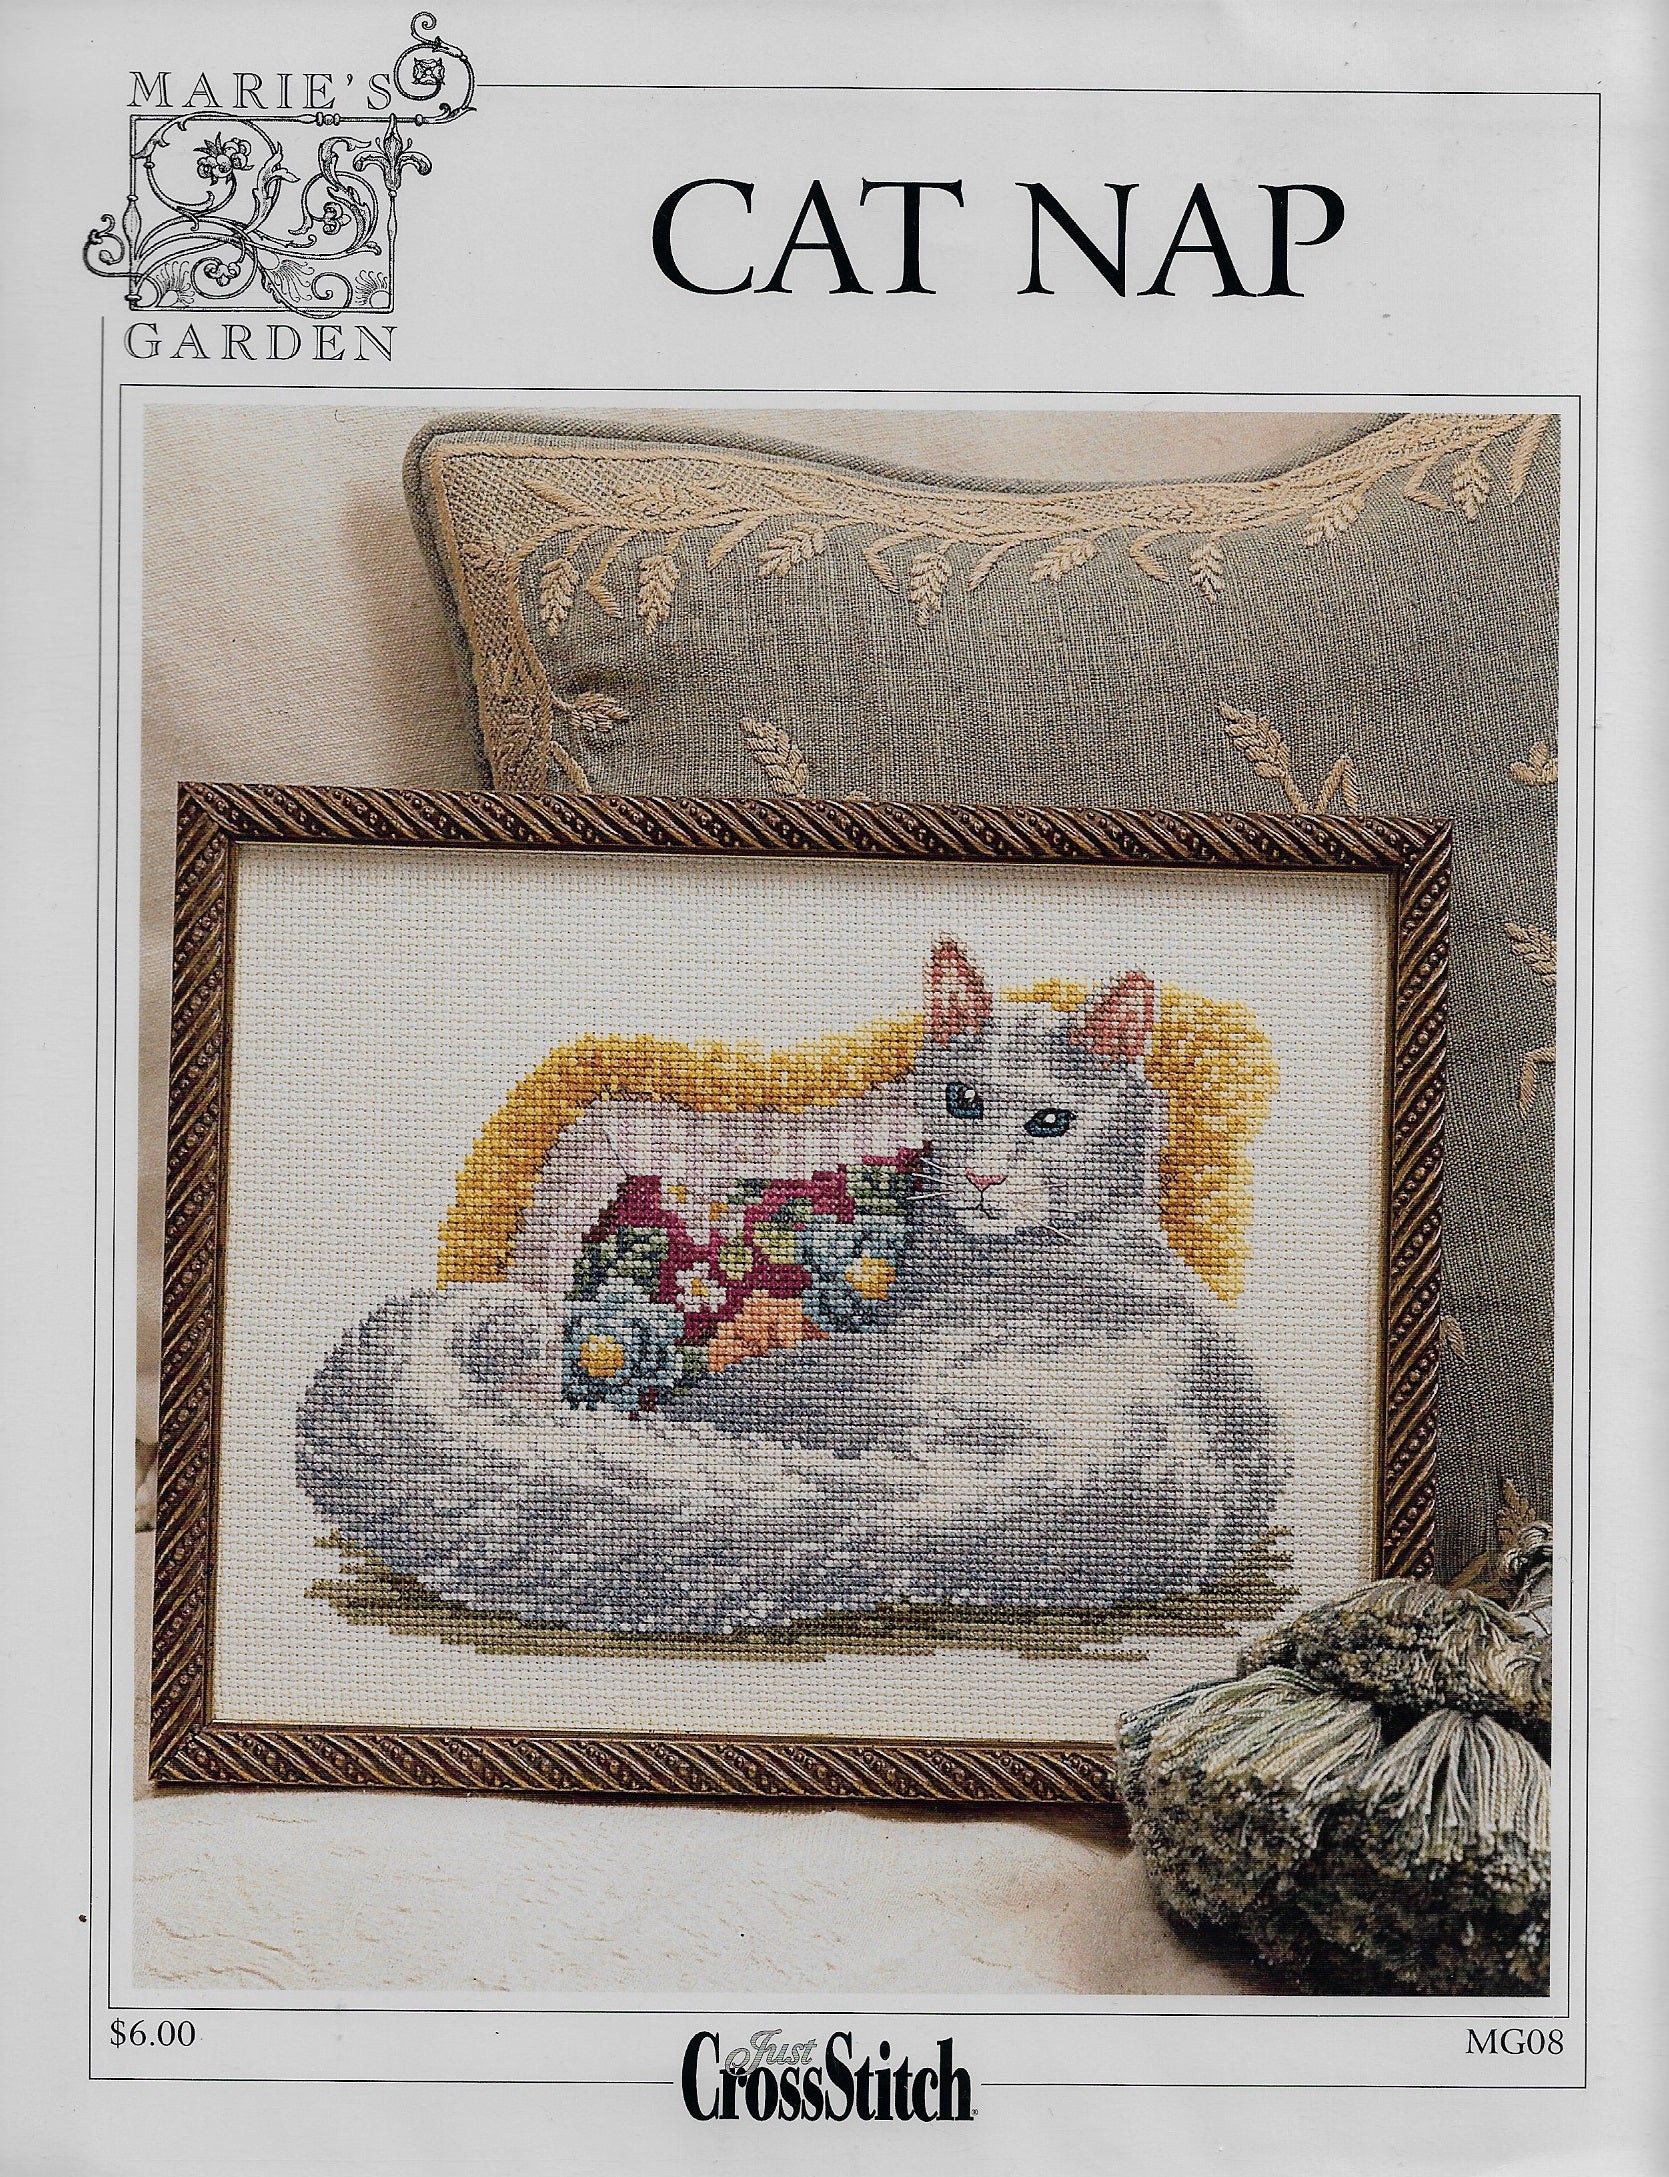 Marie;s Garden Cat Nap cross stitch pattern